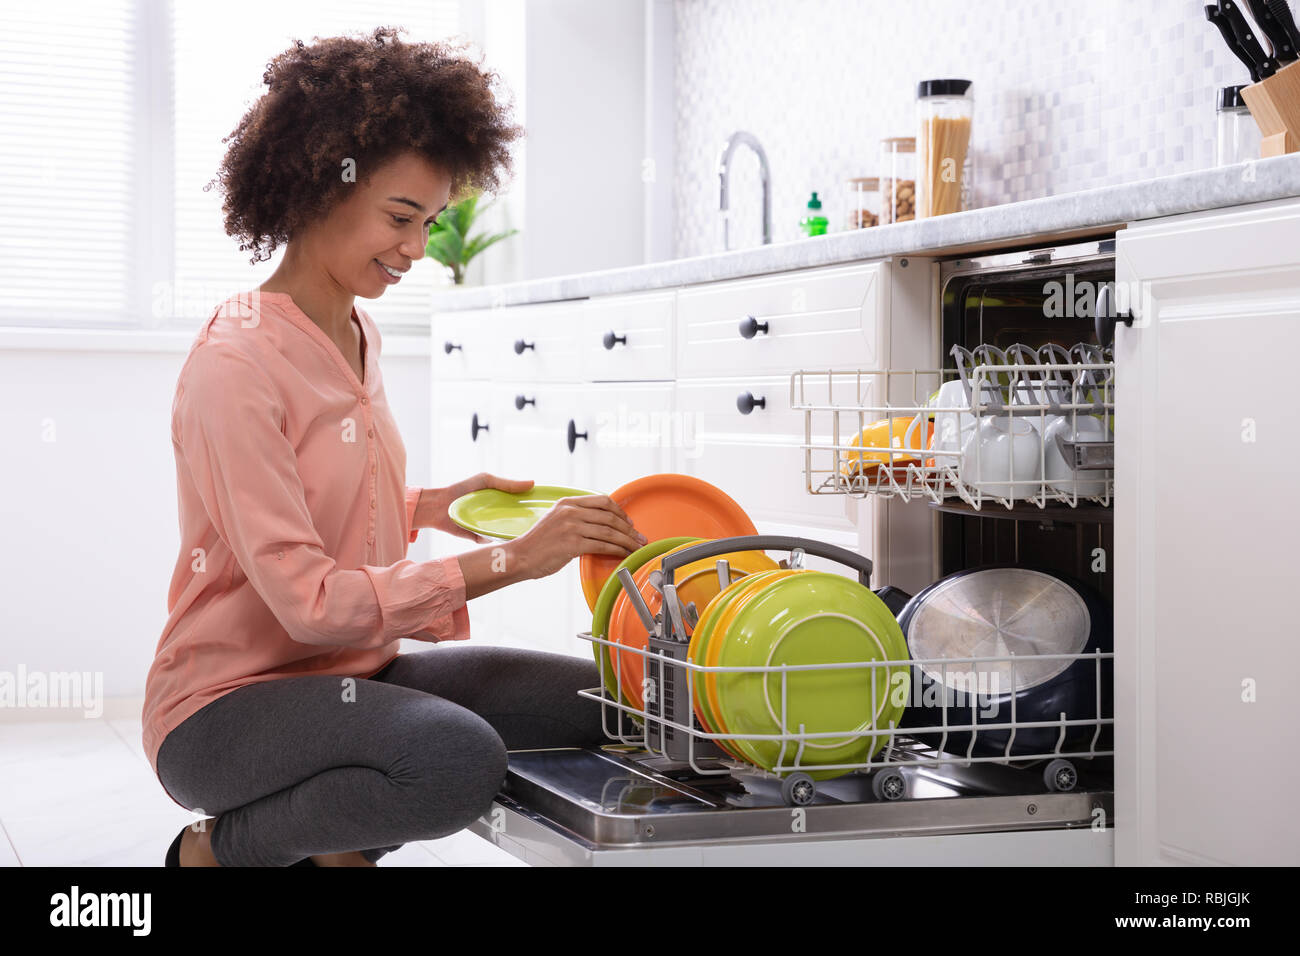 https://c8.alamy.com/comp/RBJGJK/smiling-young-woman-crouching-on-floor-arranging-plates-in-dishwasher-at-modular-kitchen-RBJGJK.jpg